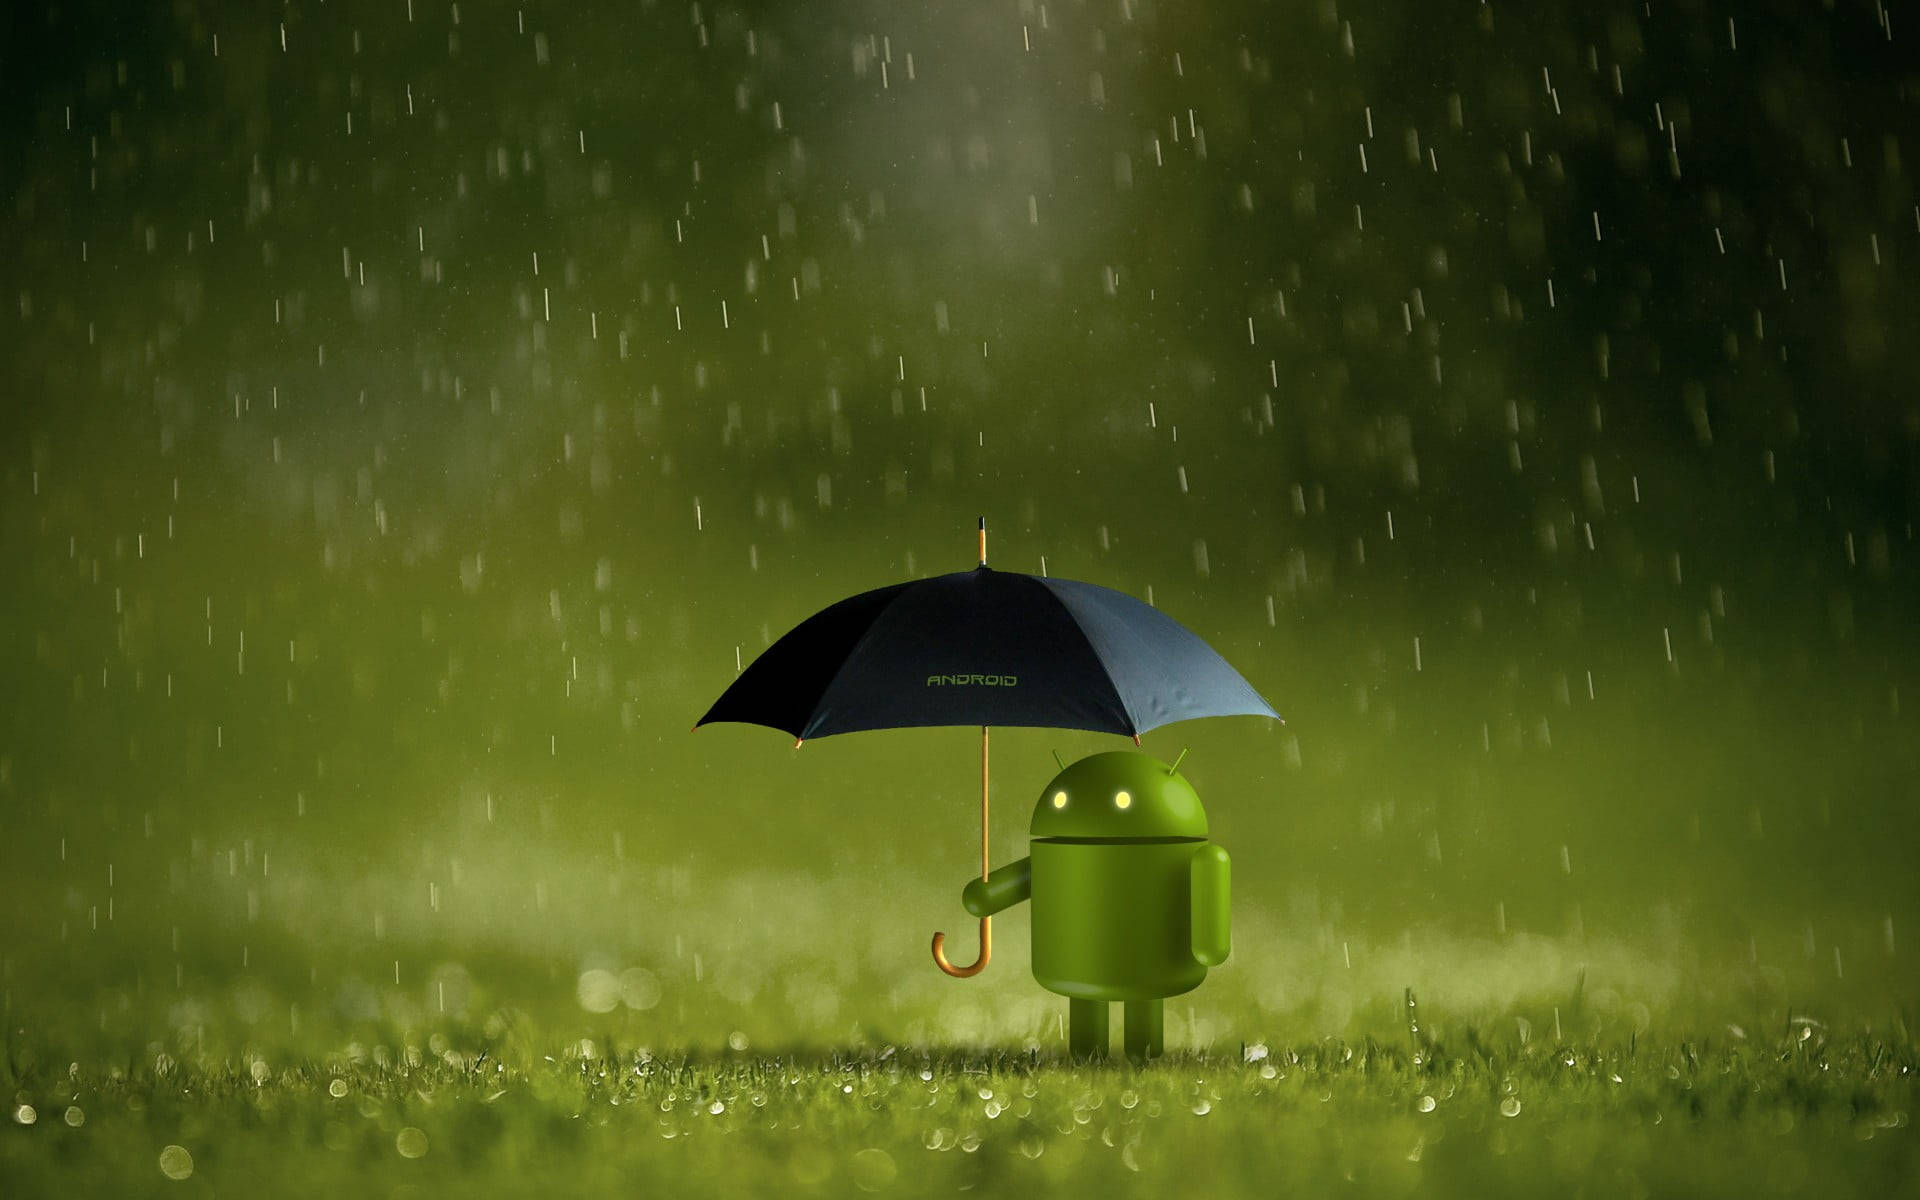 Android Under Blue Umbrella Most Beautiful Rain Wallpaper